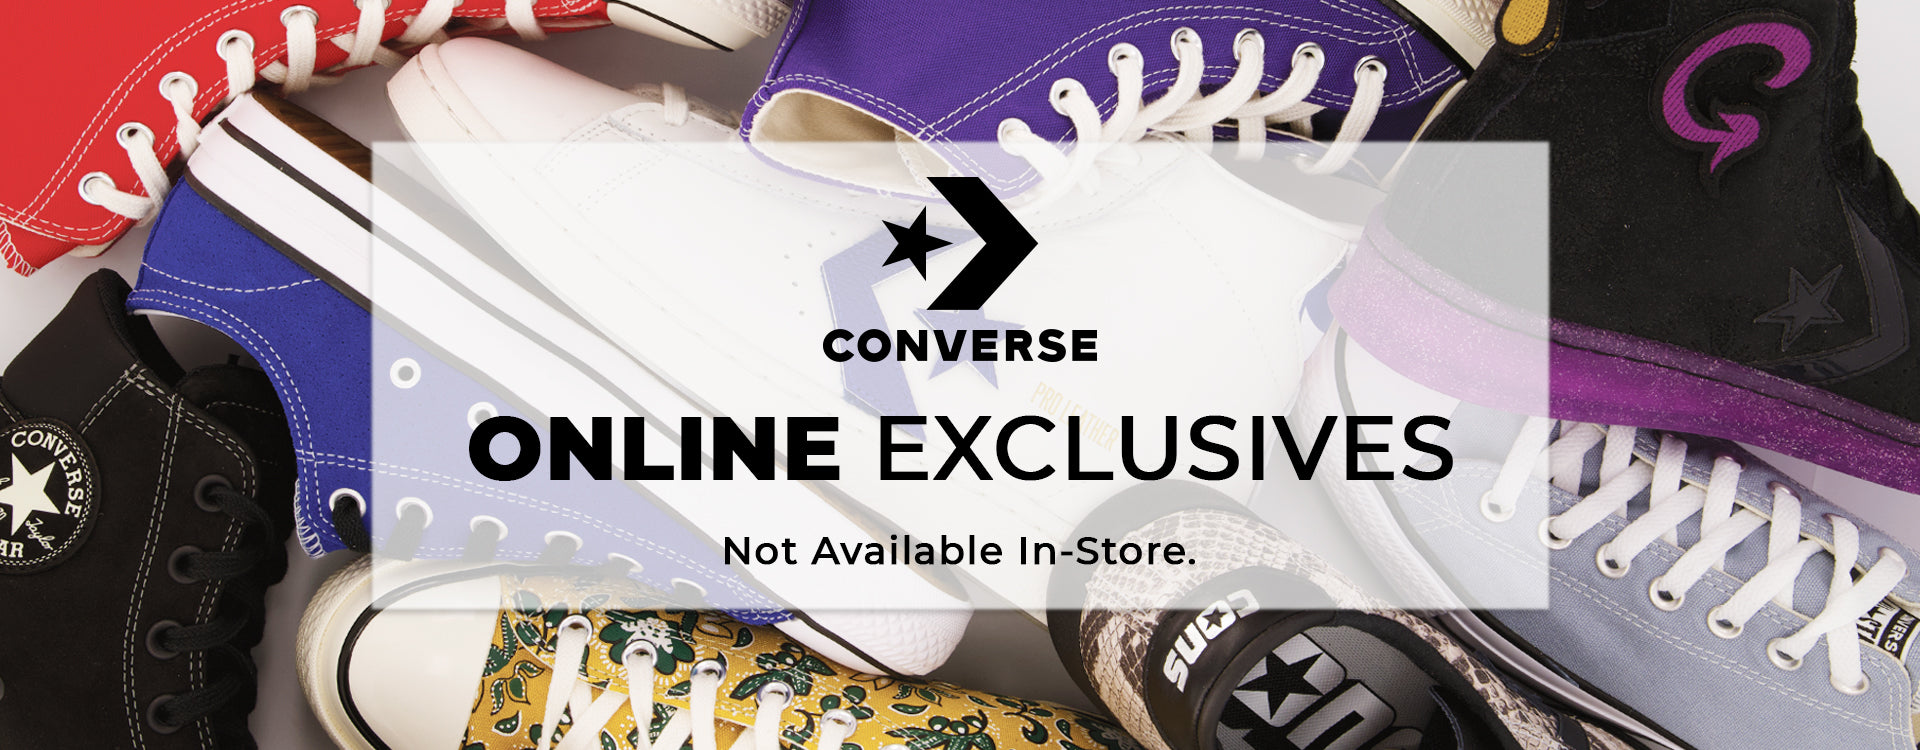 Converse Online Exclusives